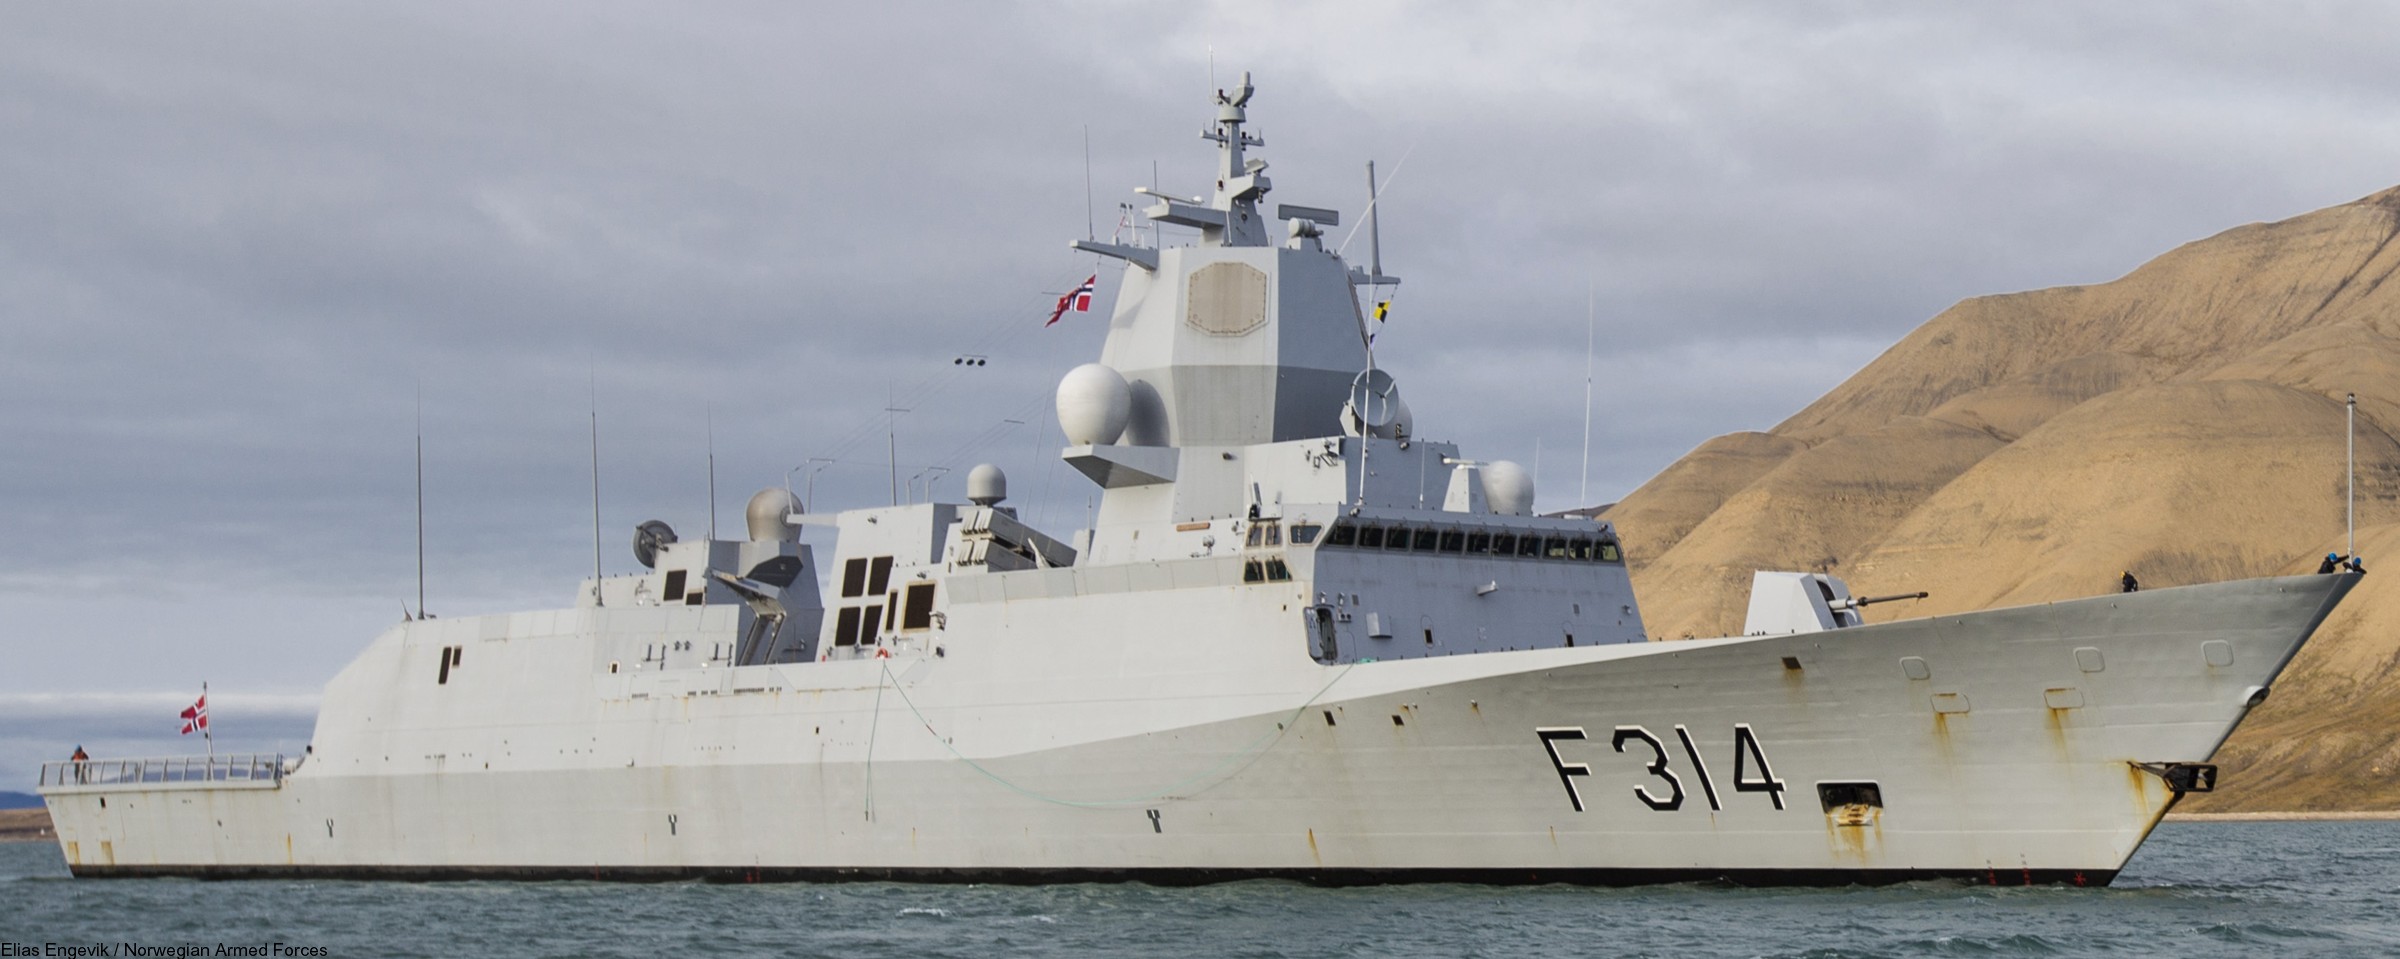 f-314 thor heyerdahl hnoms knm fridtjof nansen class frigate royal norwegian navy 35